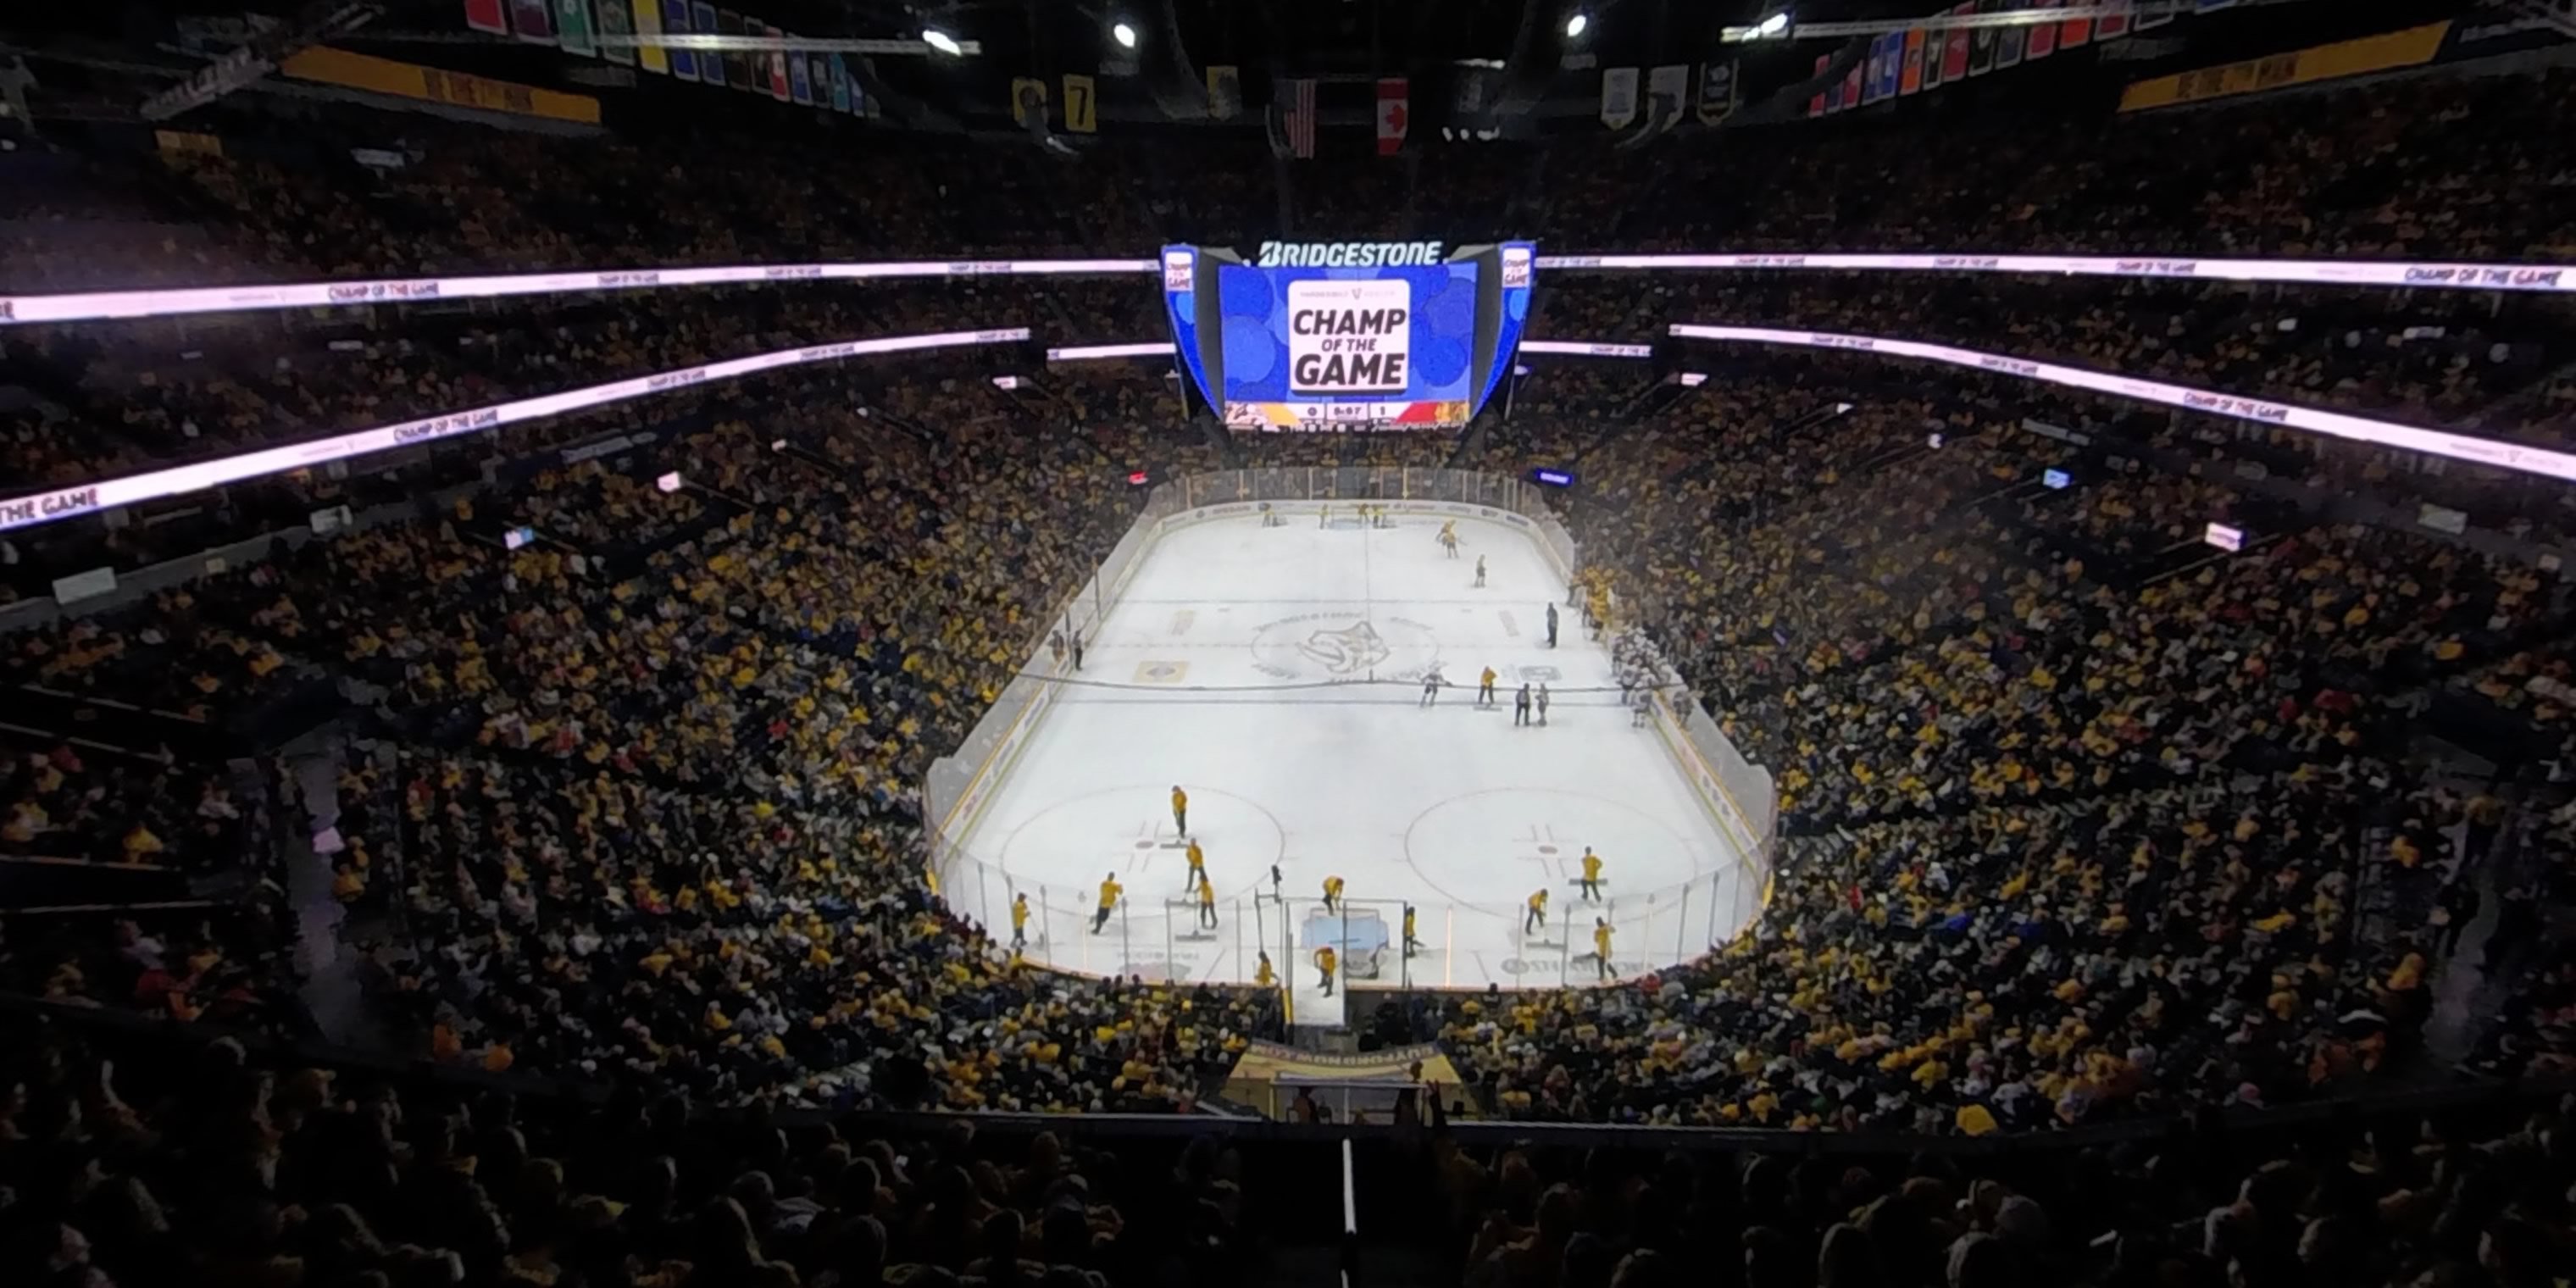 section 317 panoramic seat view  for hockey - bridgestone arena